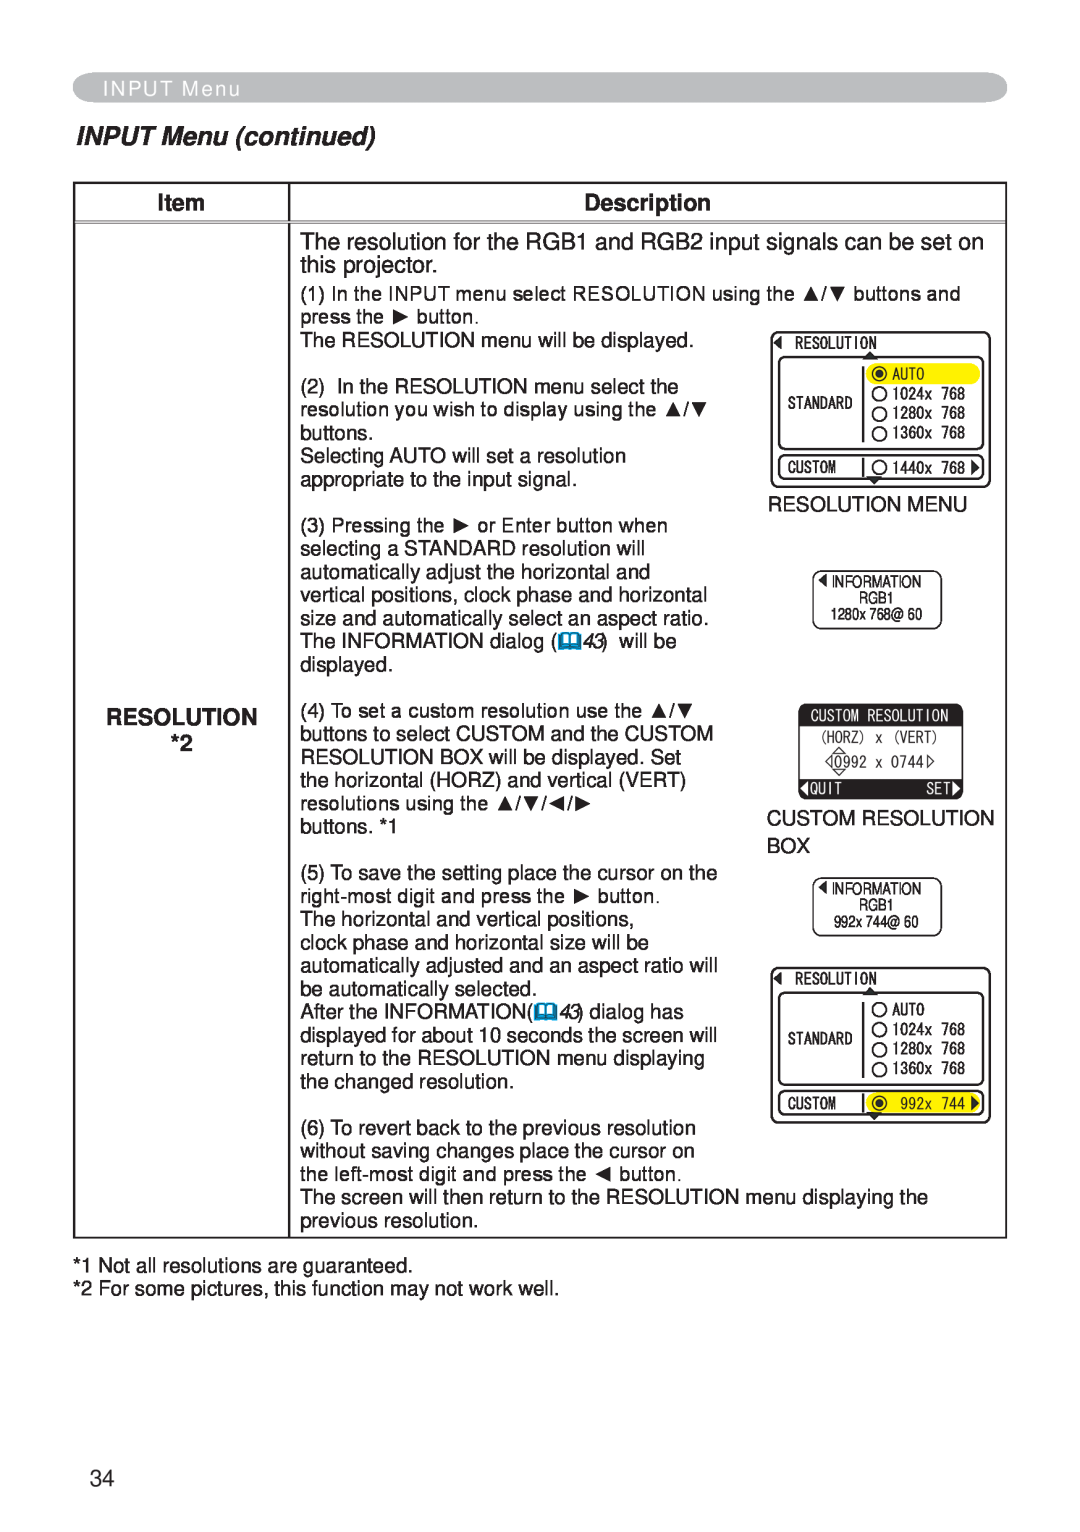 Hitachi CP-X265 user manual INPUT Menu continued, Description, The RESOLUTION menu will be displayed 